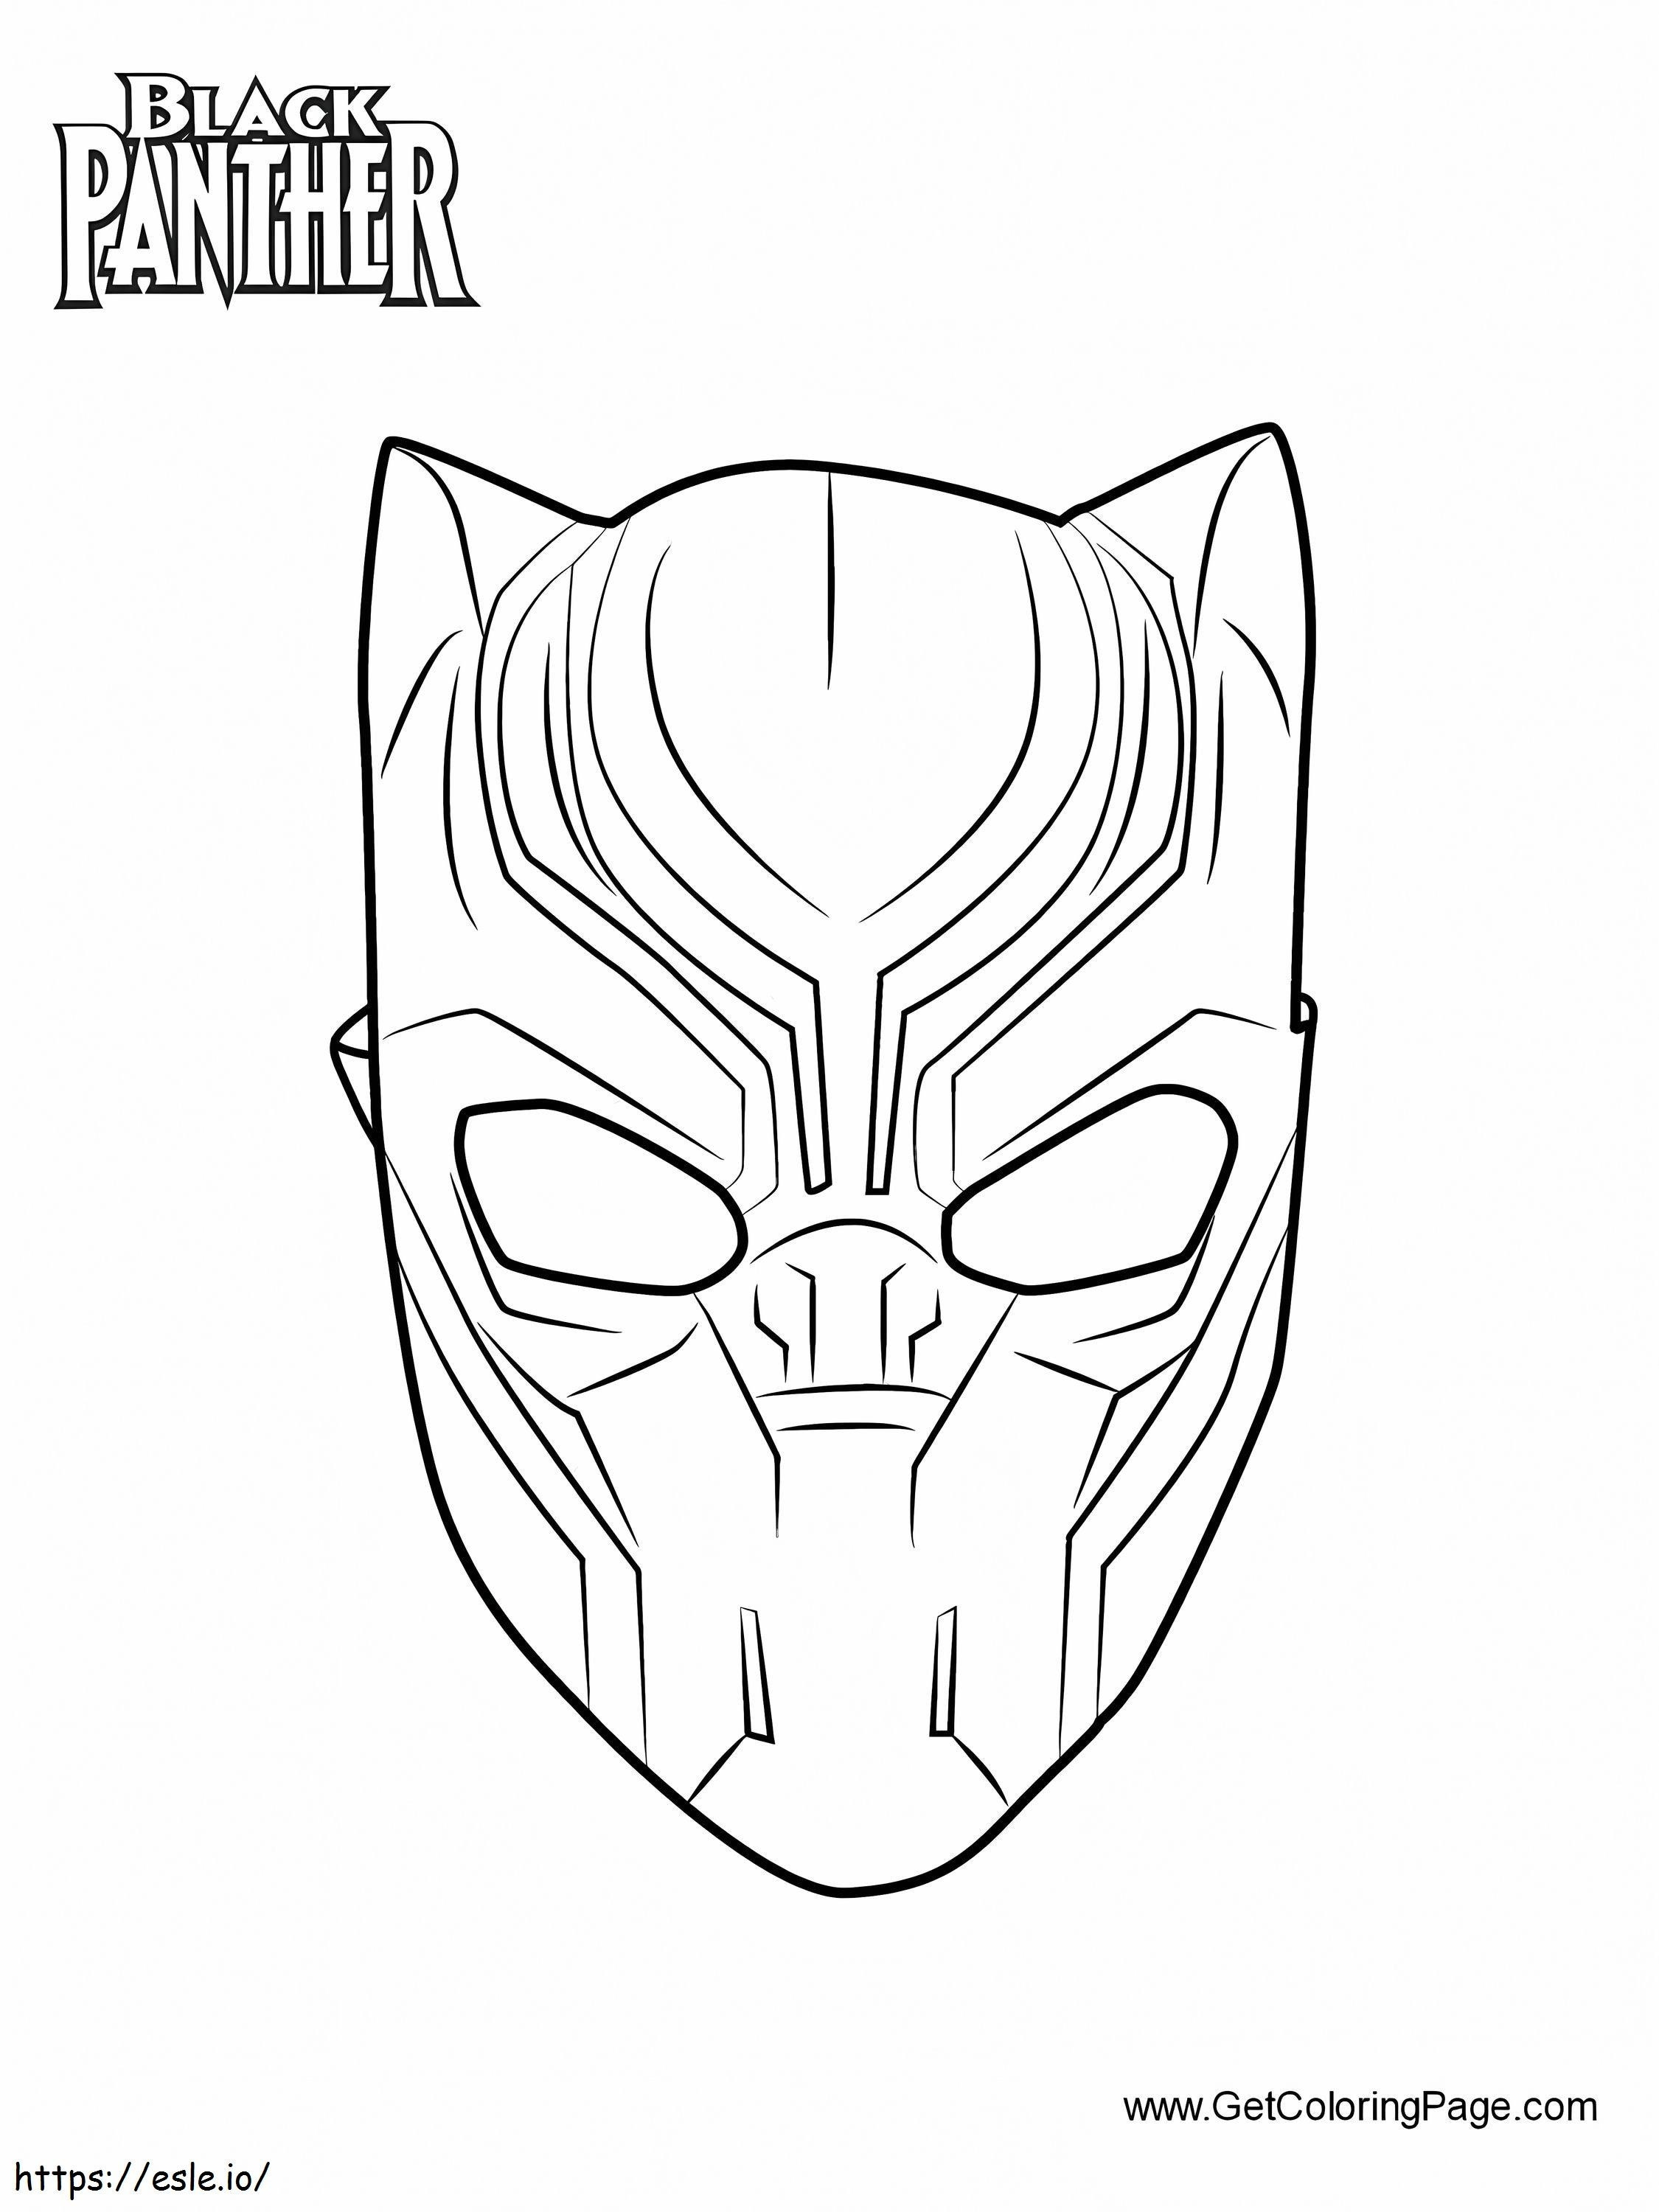 1539414888 Black Panther-masker, bedrukbaar kleurplaat kleurplaat